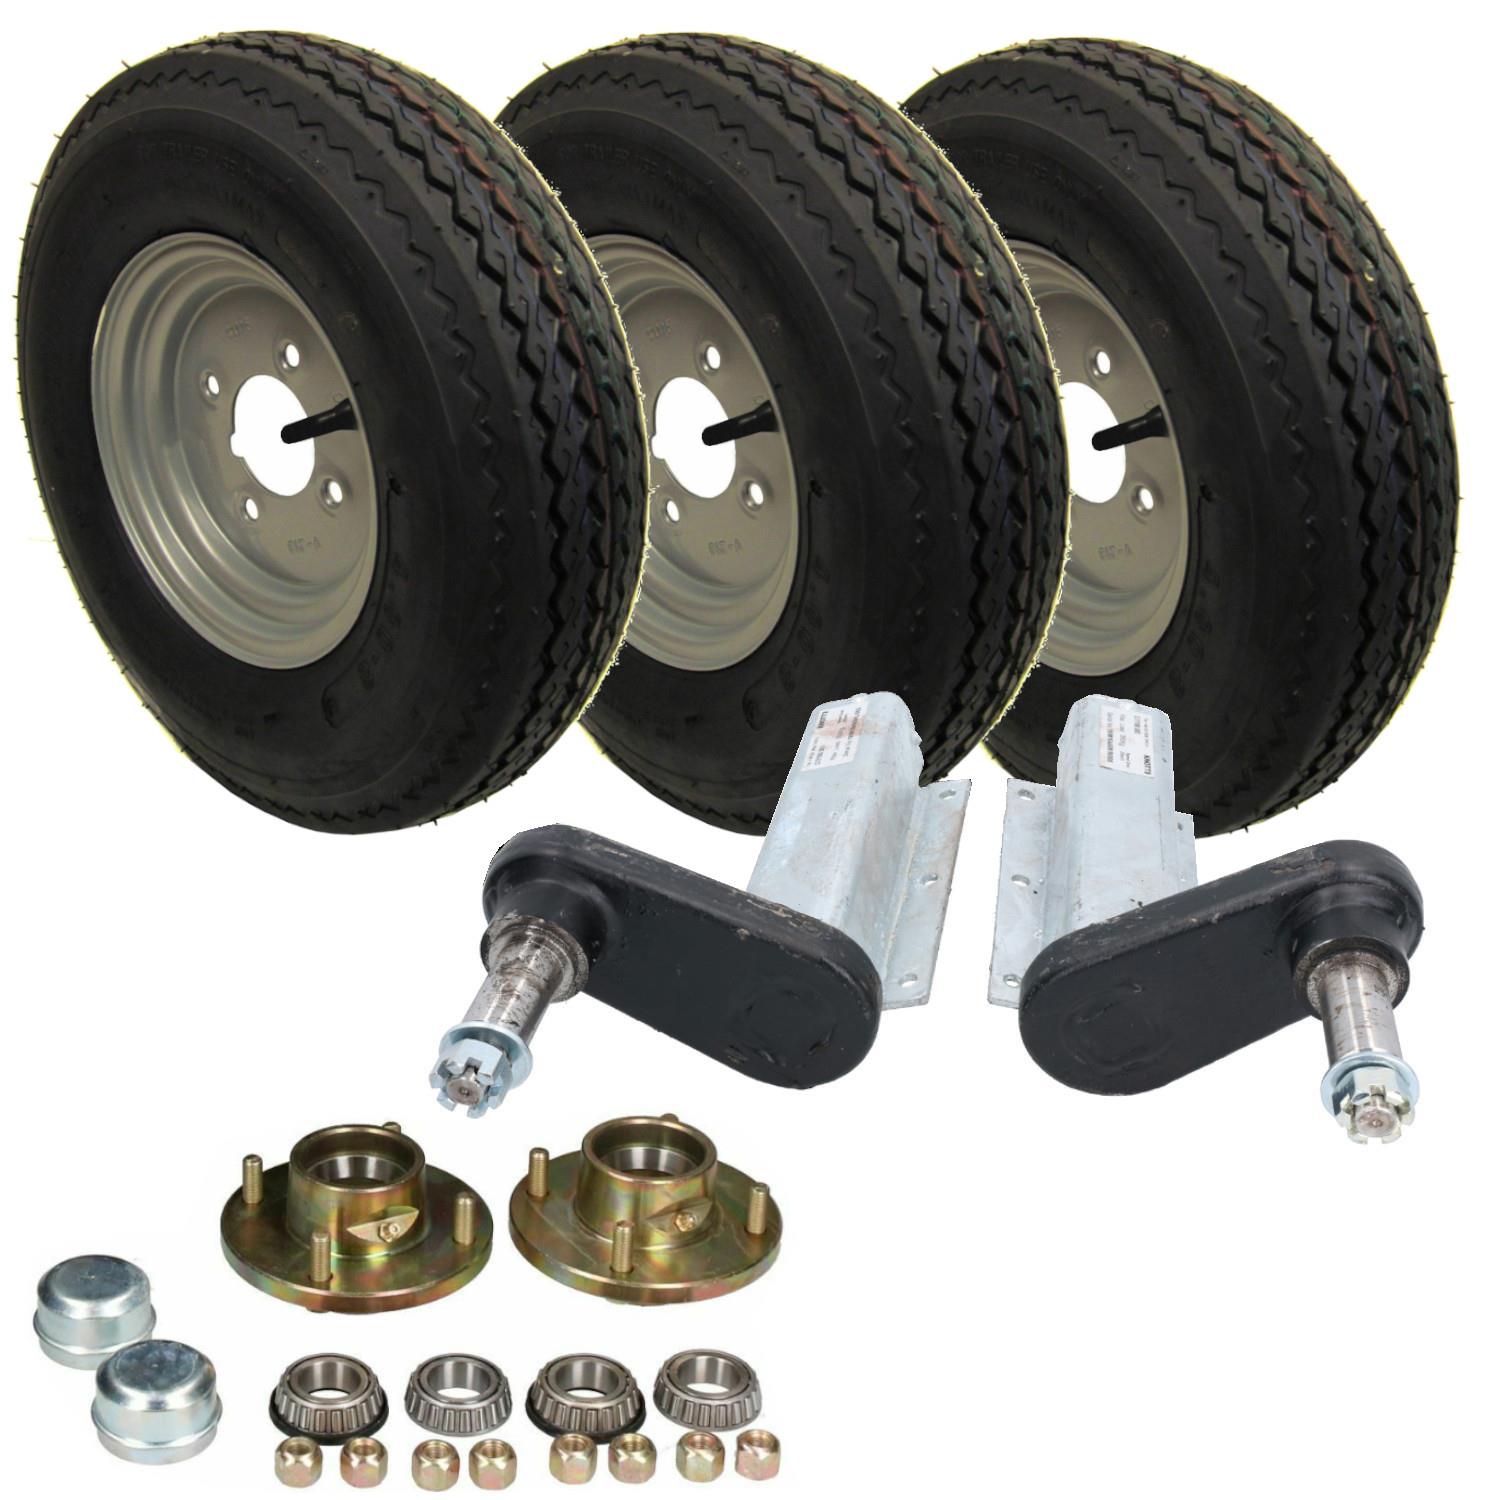 350kg Galvanised Trailer Suspension Units & 3 x 8" Wheels & Tyres Kit 4" PCD